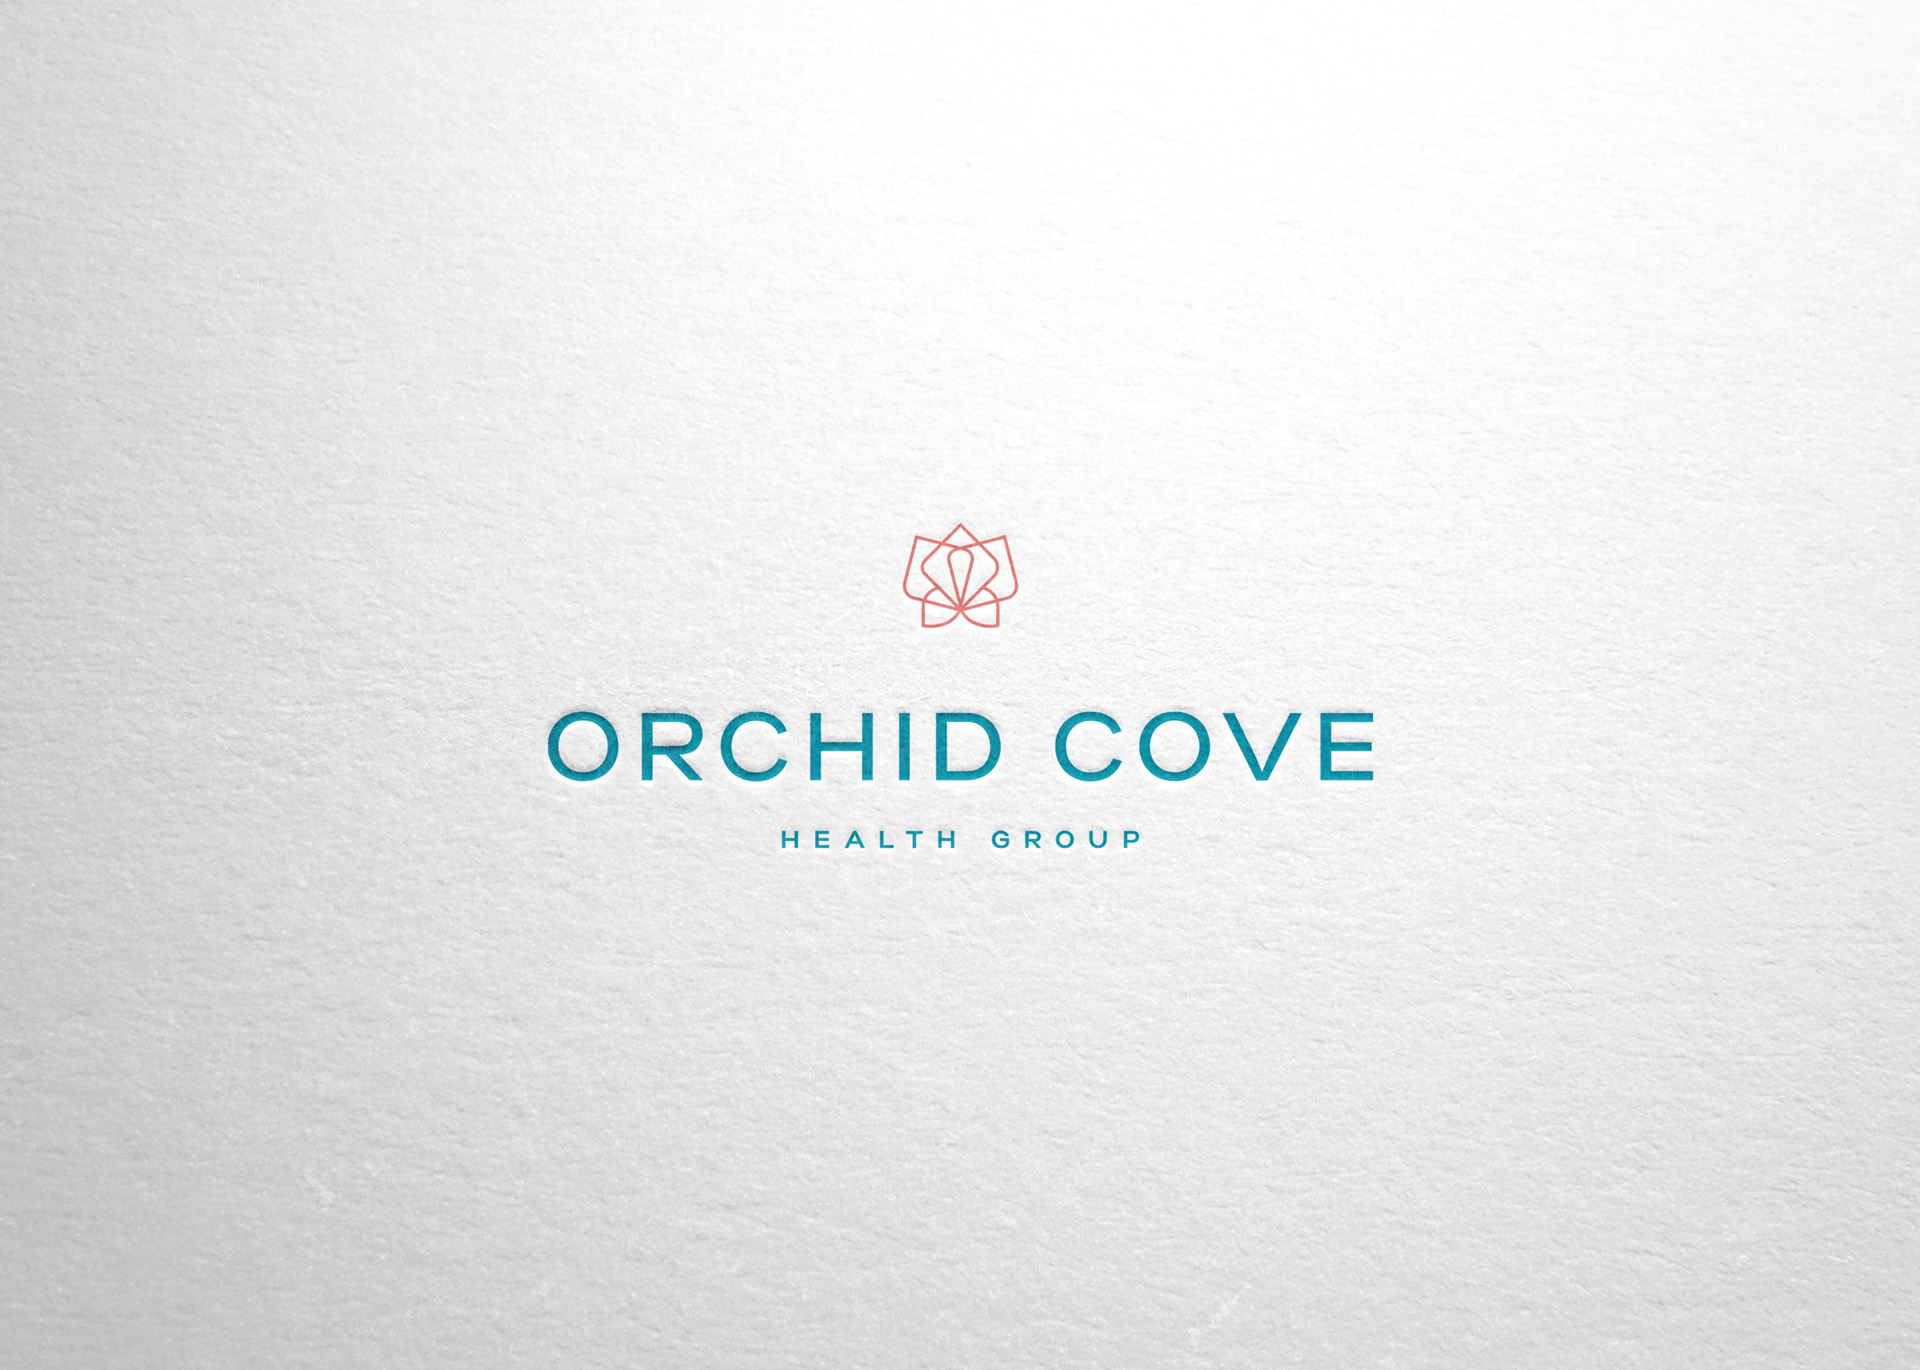 Orchid Cove_1b copy